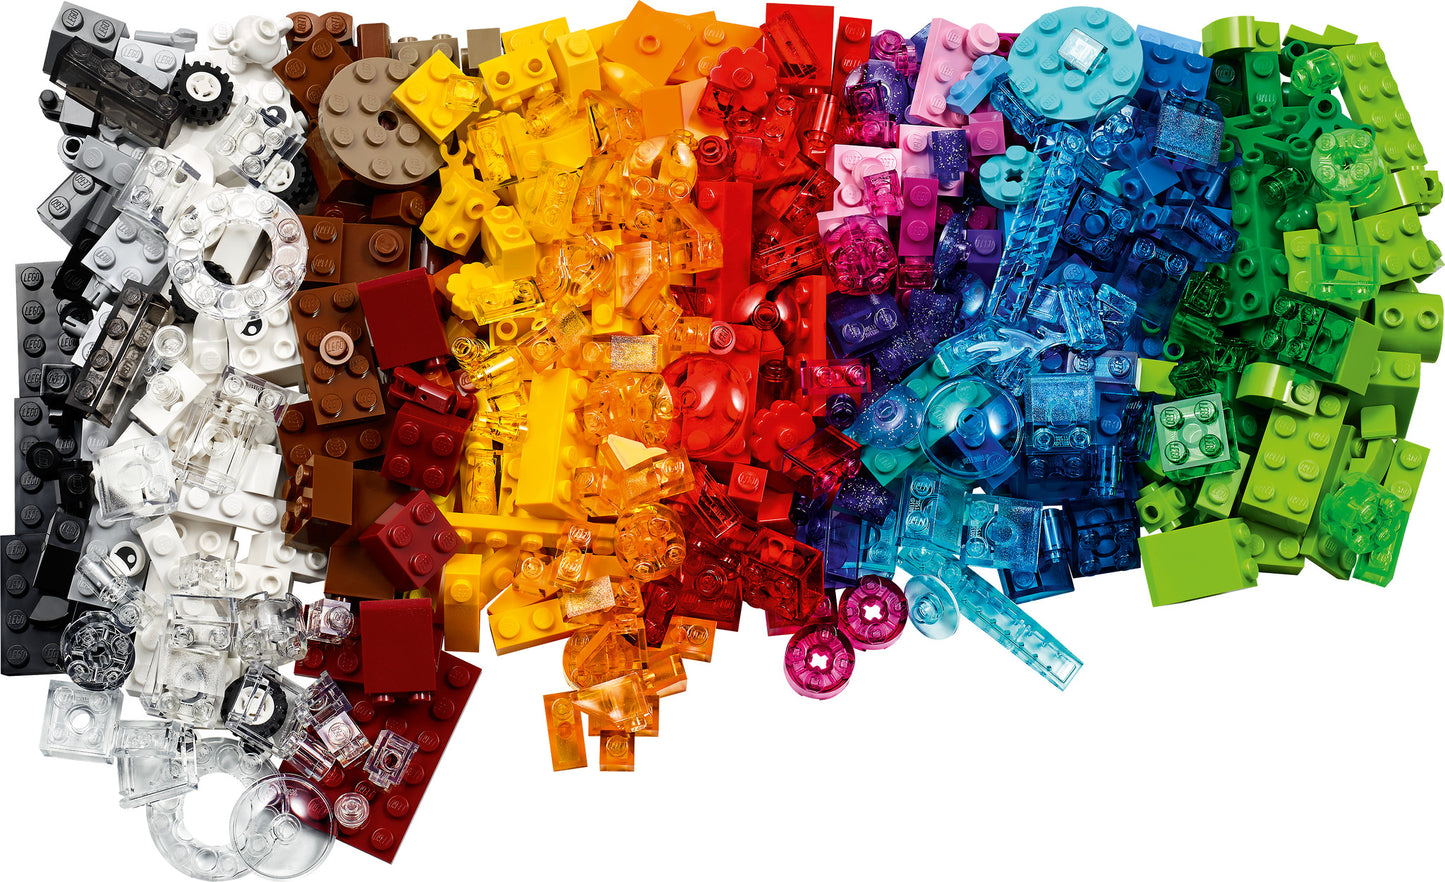 11013 LEGO Classic - Mattoncini Trasparenti Creativi